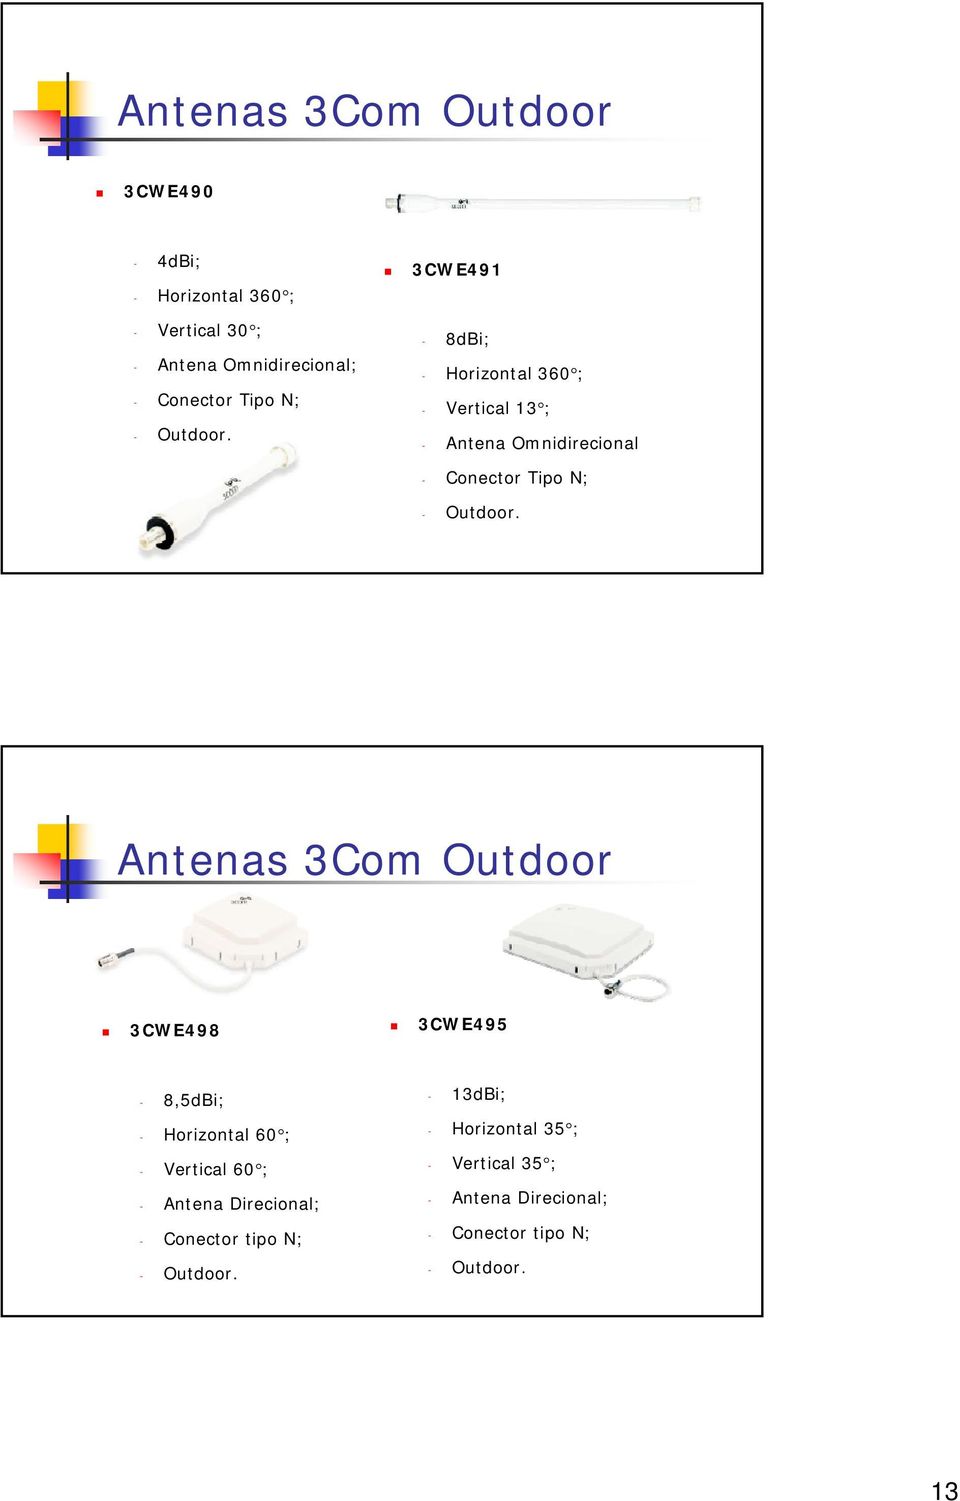 Antenas 3Com Outdoor 3CWE498 3CWE495-8,5dBi; - Horizontal 60 ; - Vertical 60 ; - Antena Direcional; - Conector